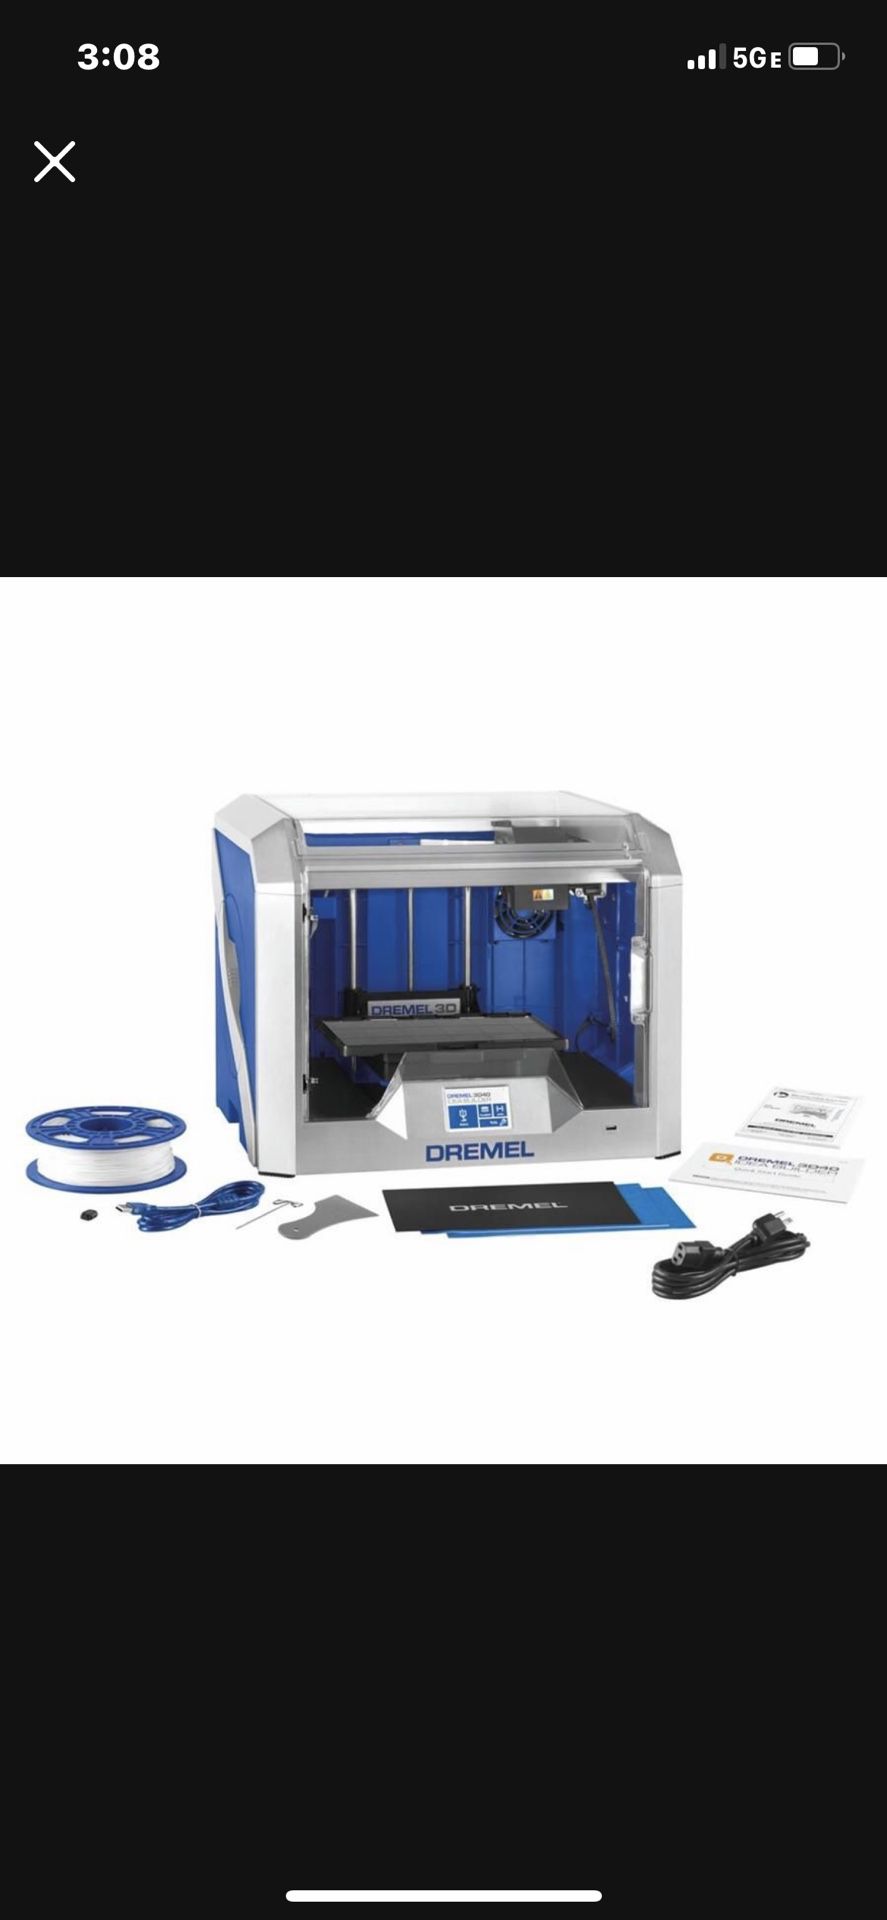 NEW Unopened 3D printer!! Dremel 3D40-01 